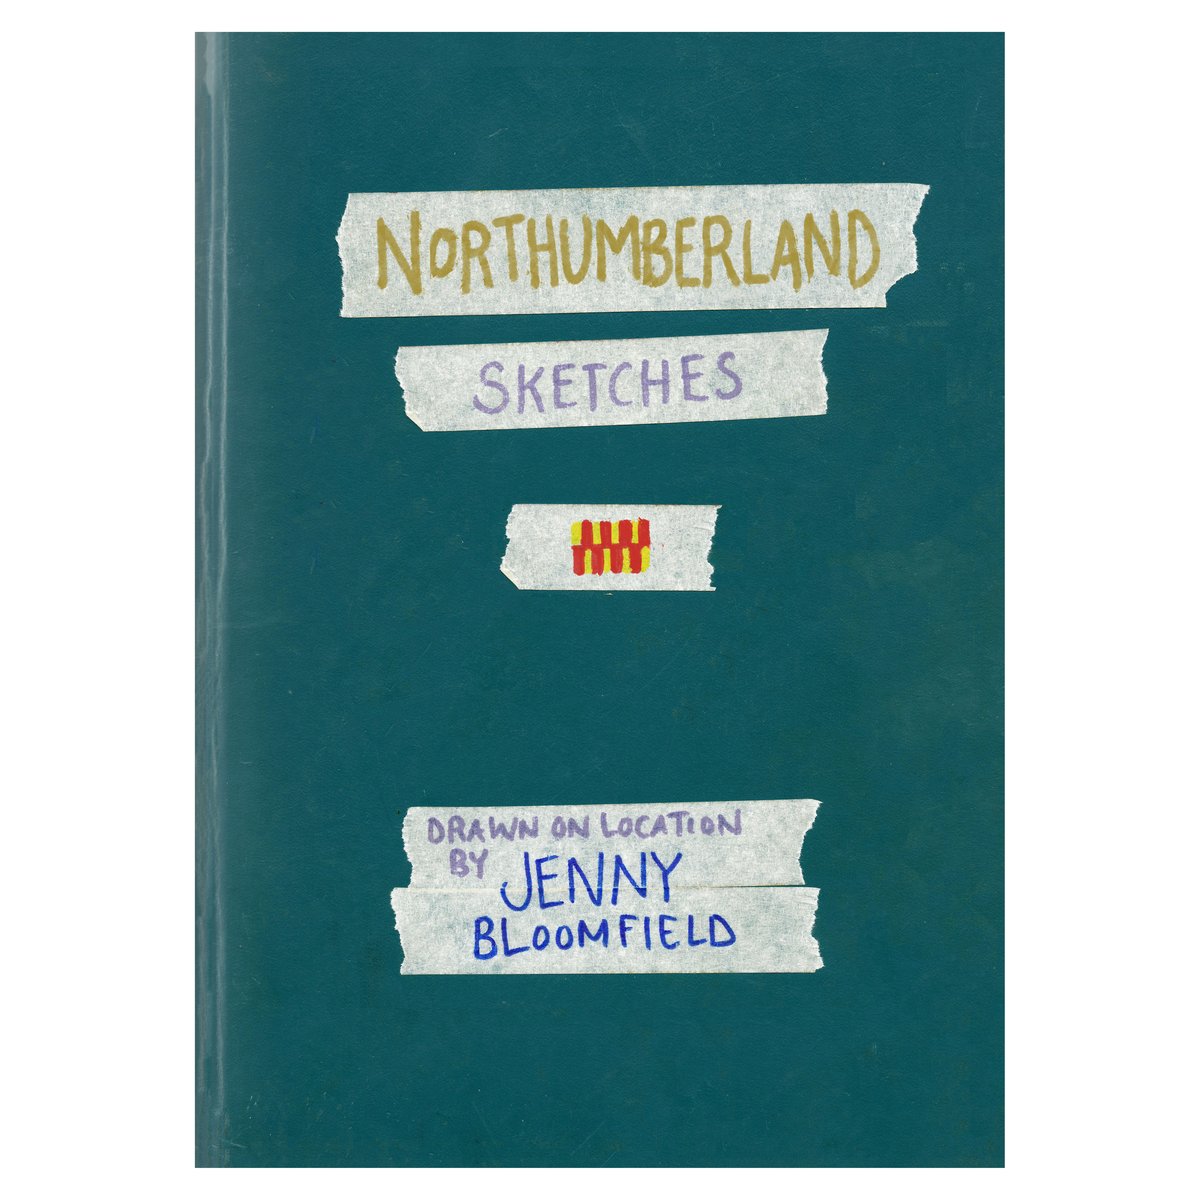 Image of Northumberland Sketches - Sketchbook Zine